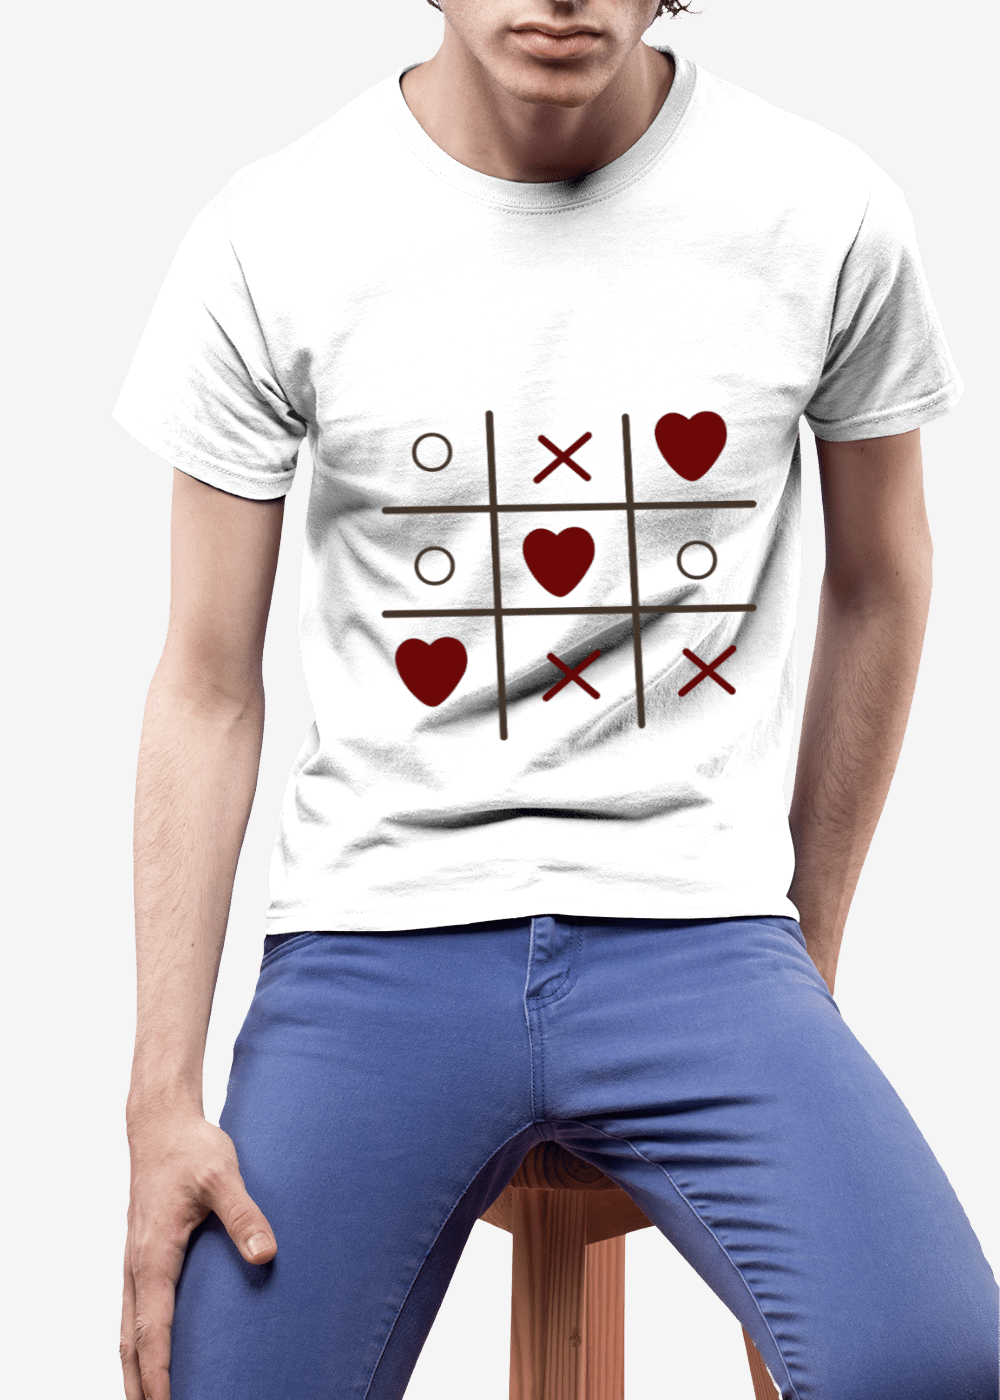 Tic Tac Toe Men's Best T-Shirt - Fun Game Print for Casual Wear